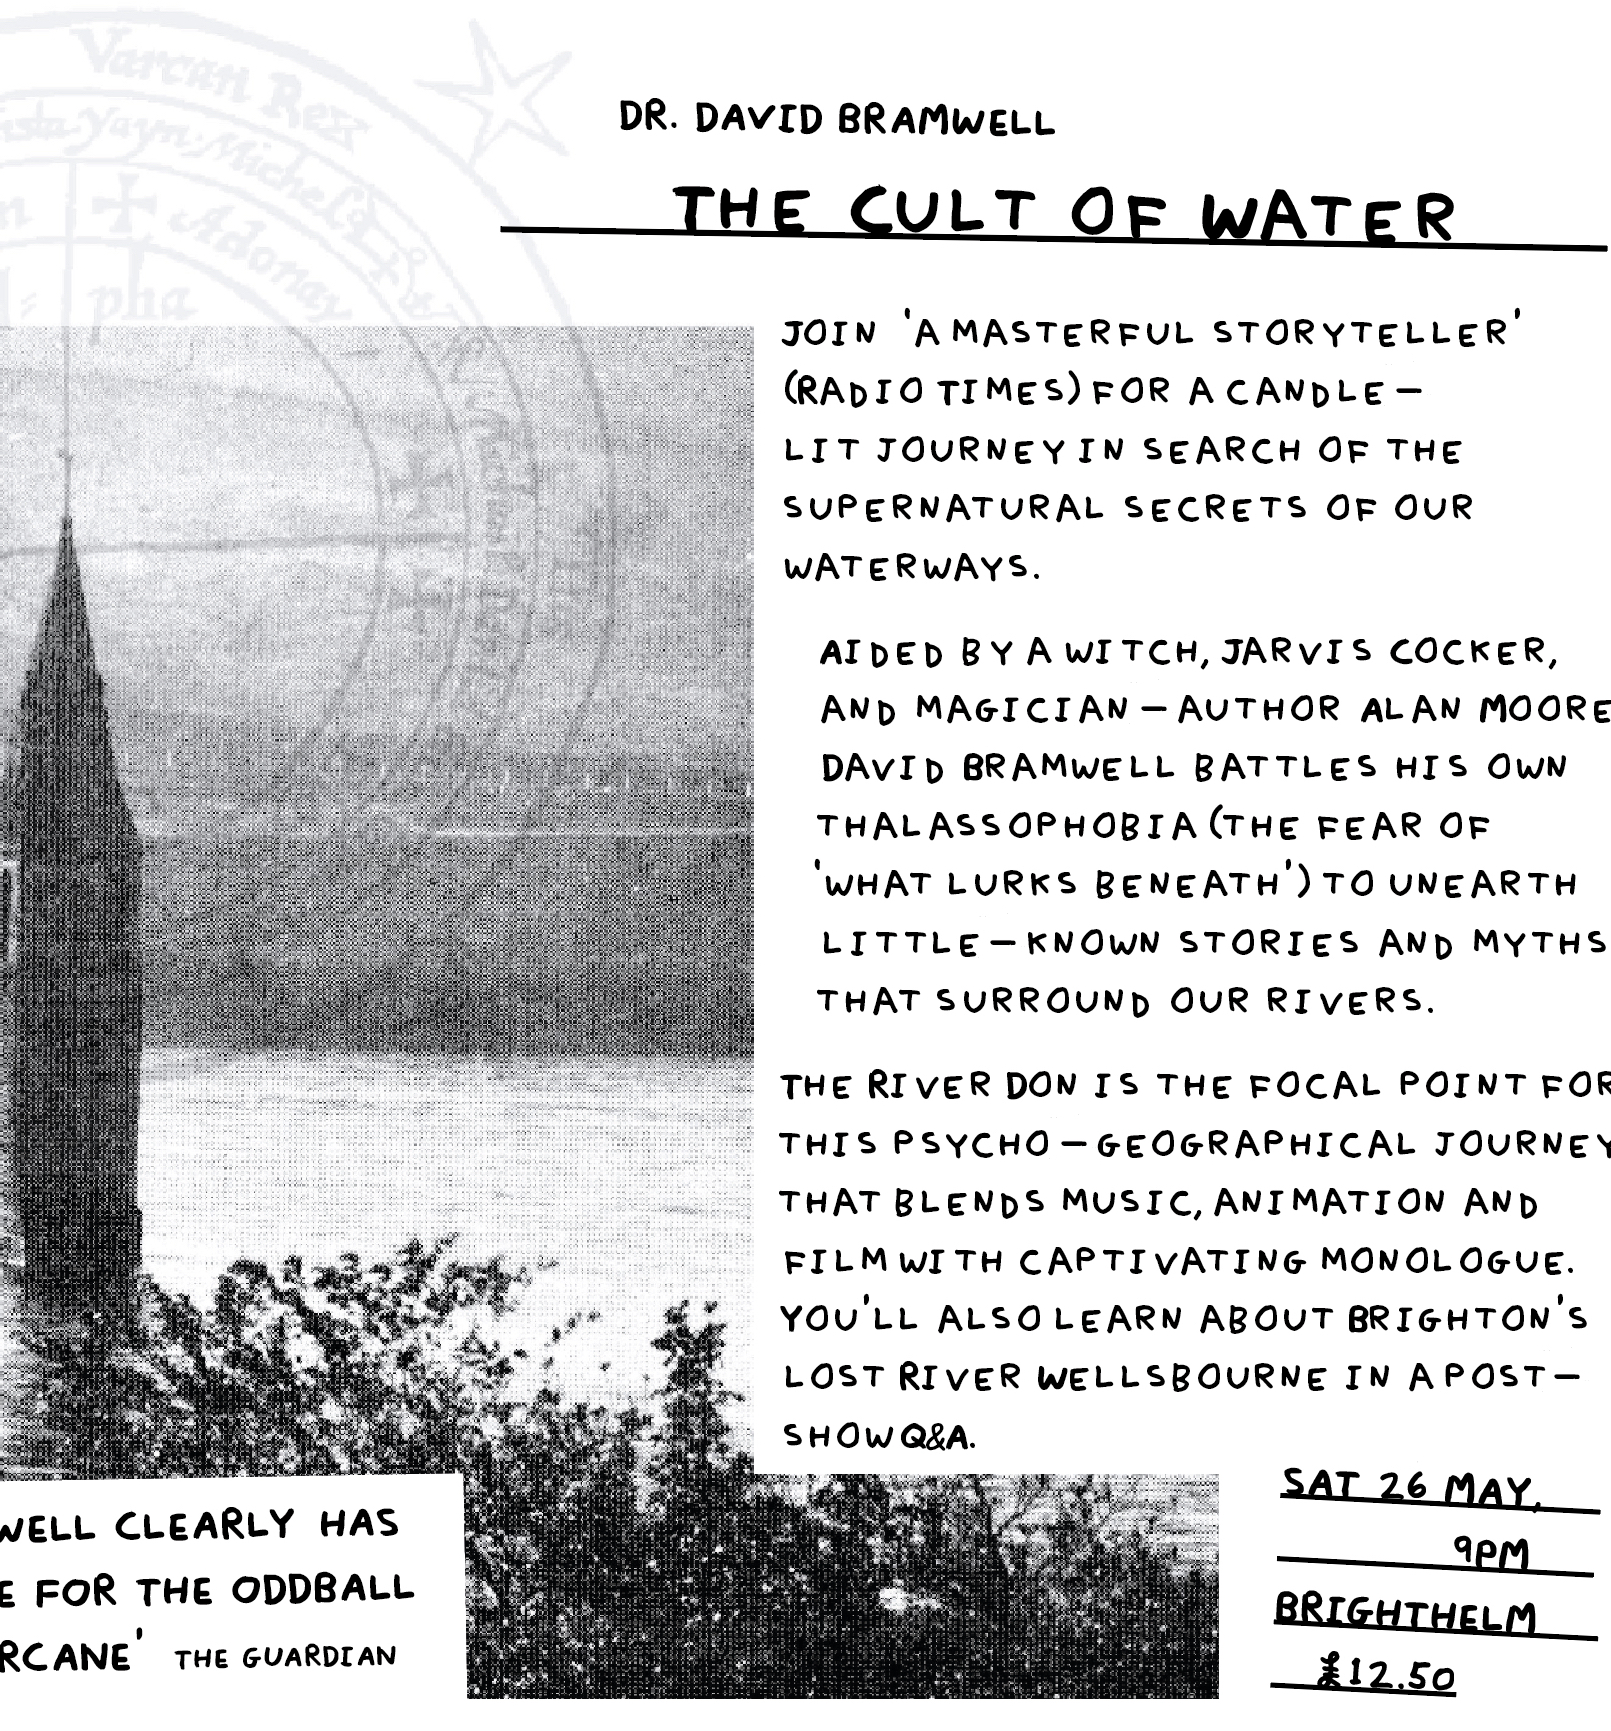 The Cult of Water 22 Jan copy.jpg